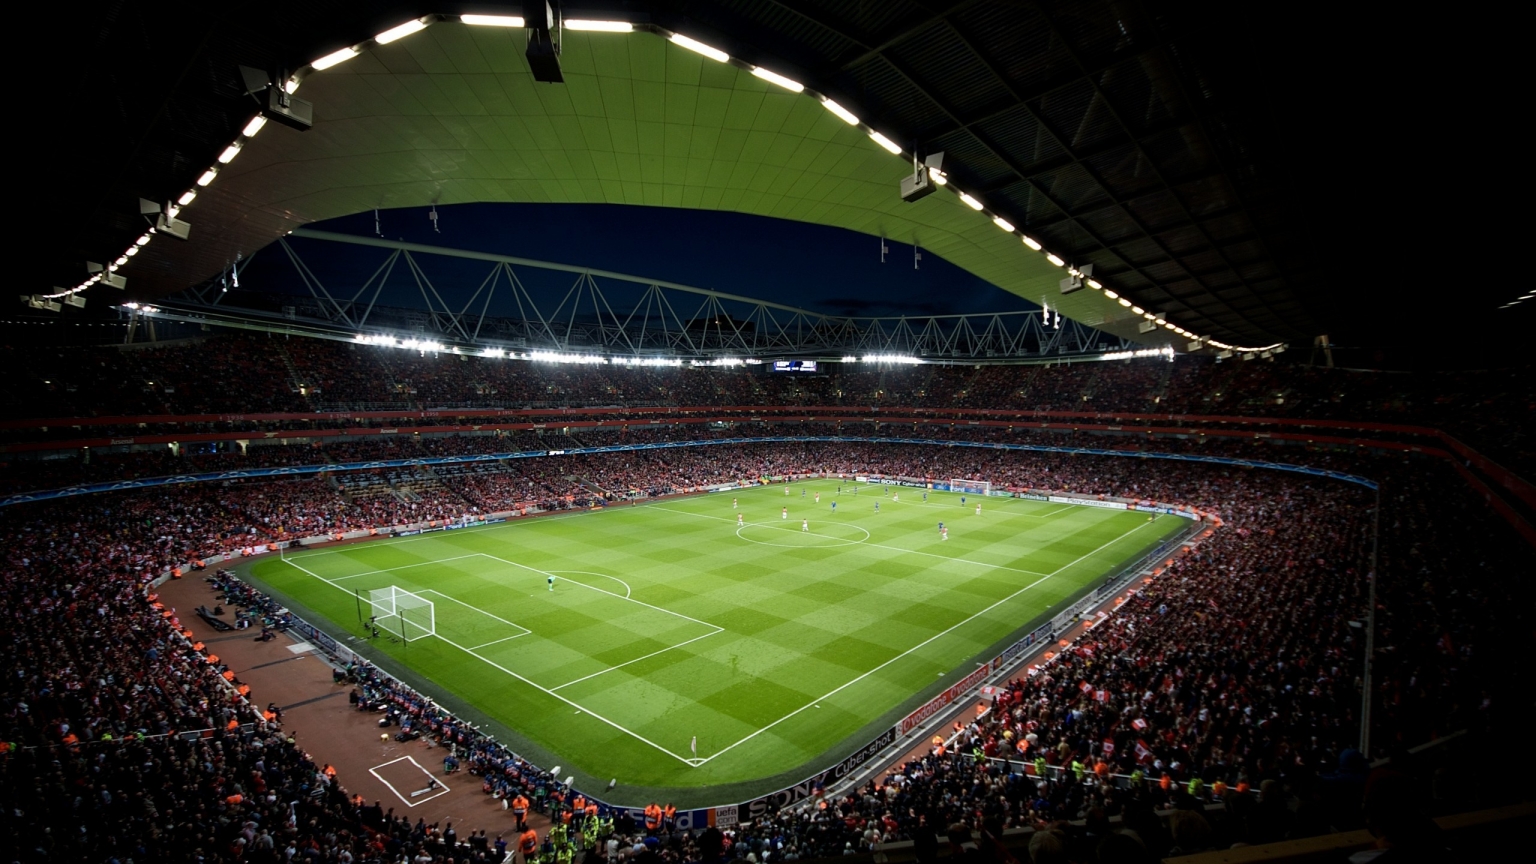 Stadium in Emirates for 1536 x 864 HDTV resolution